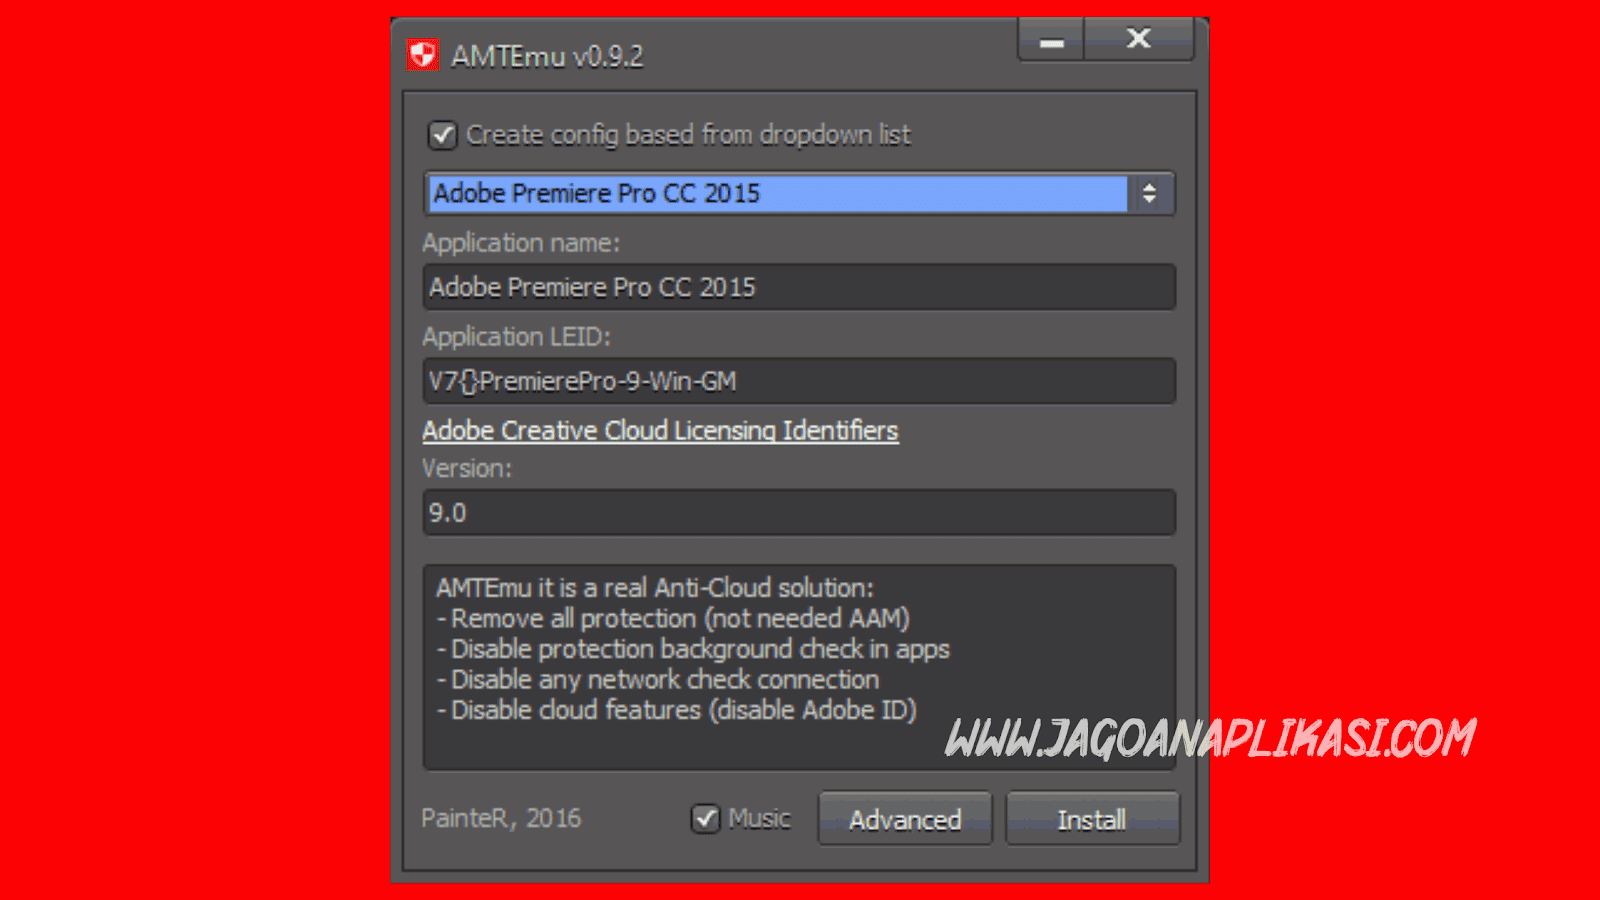 Adobe Premiere Pro CC 2015 v9.0 minimum system requirements